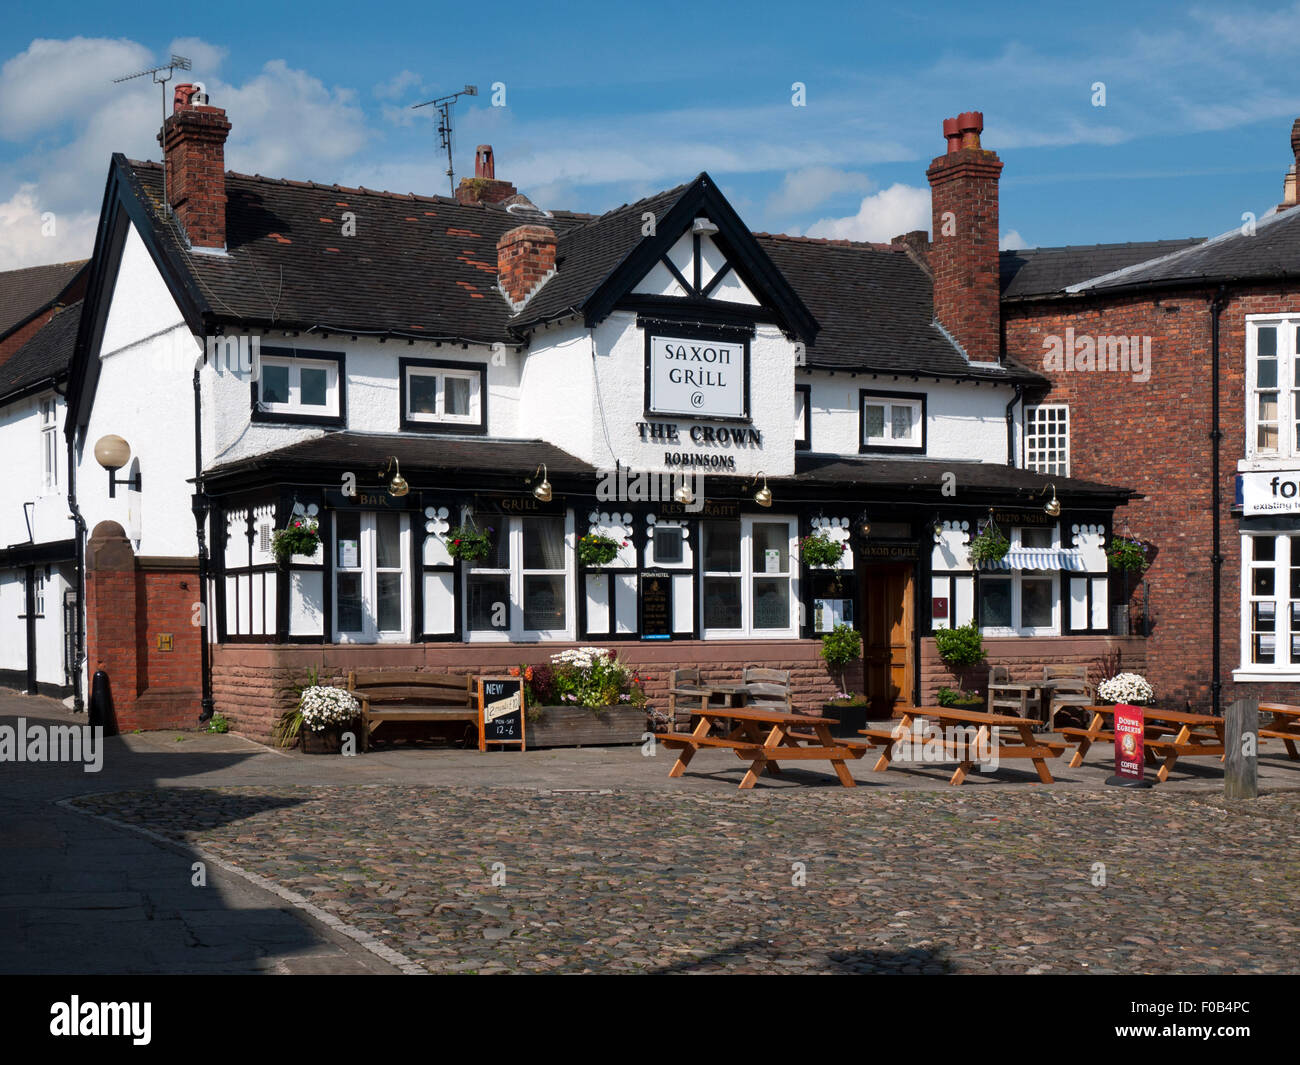 The Crown Inn, Market Square, High Street, Sandbach, Cheshire, England, UK Stock Photo